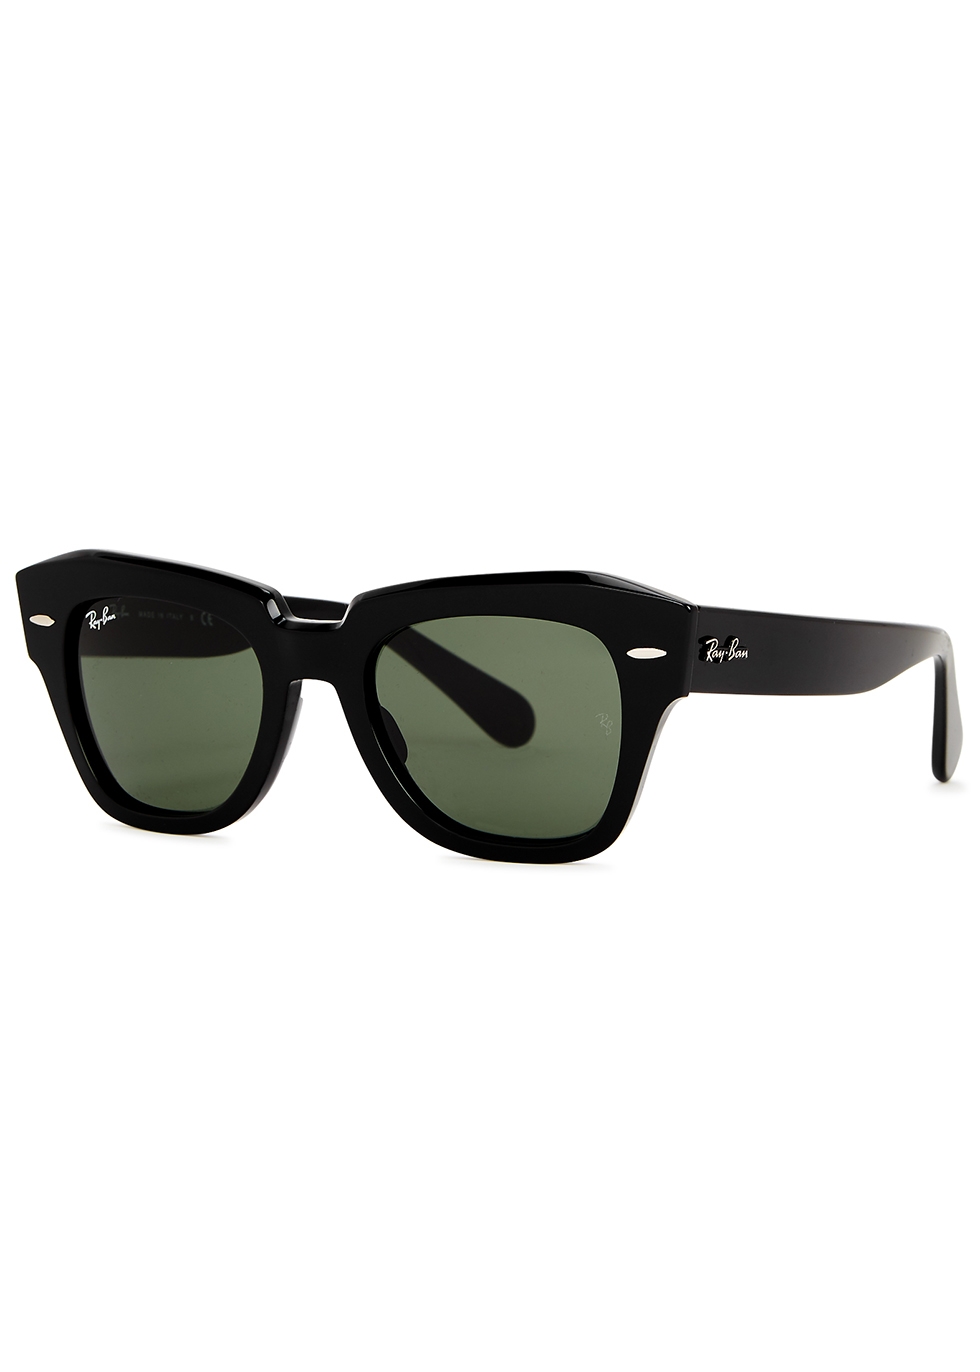 ray ban aviator black square sunglasses